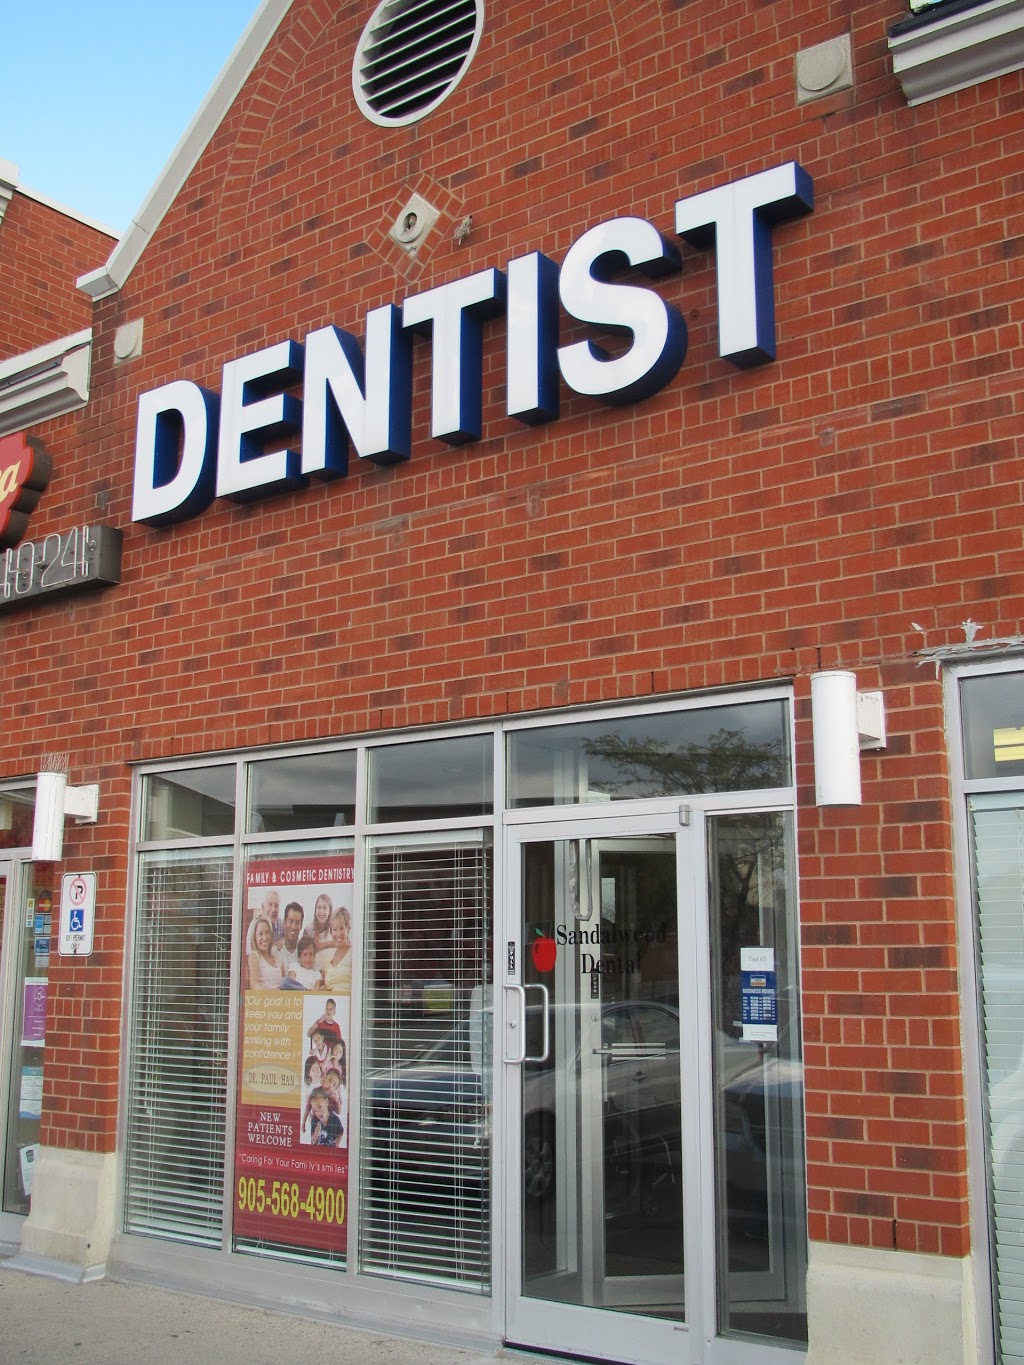 Sandalwood Dental | 50 Bristol Rd E, Mississauga, ON L4Z 3K8, Canada | Phone: (905) 568-4900